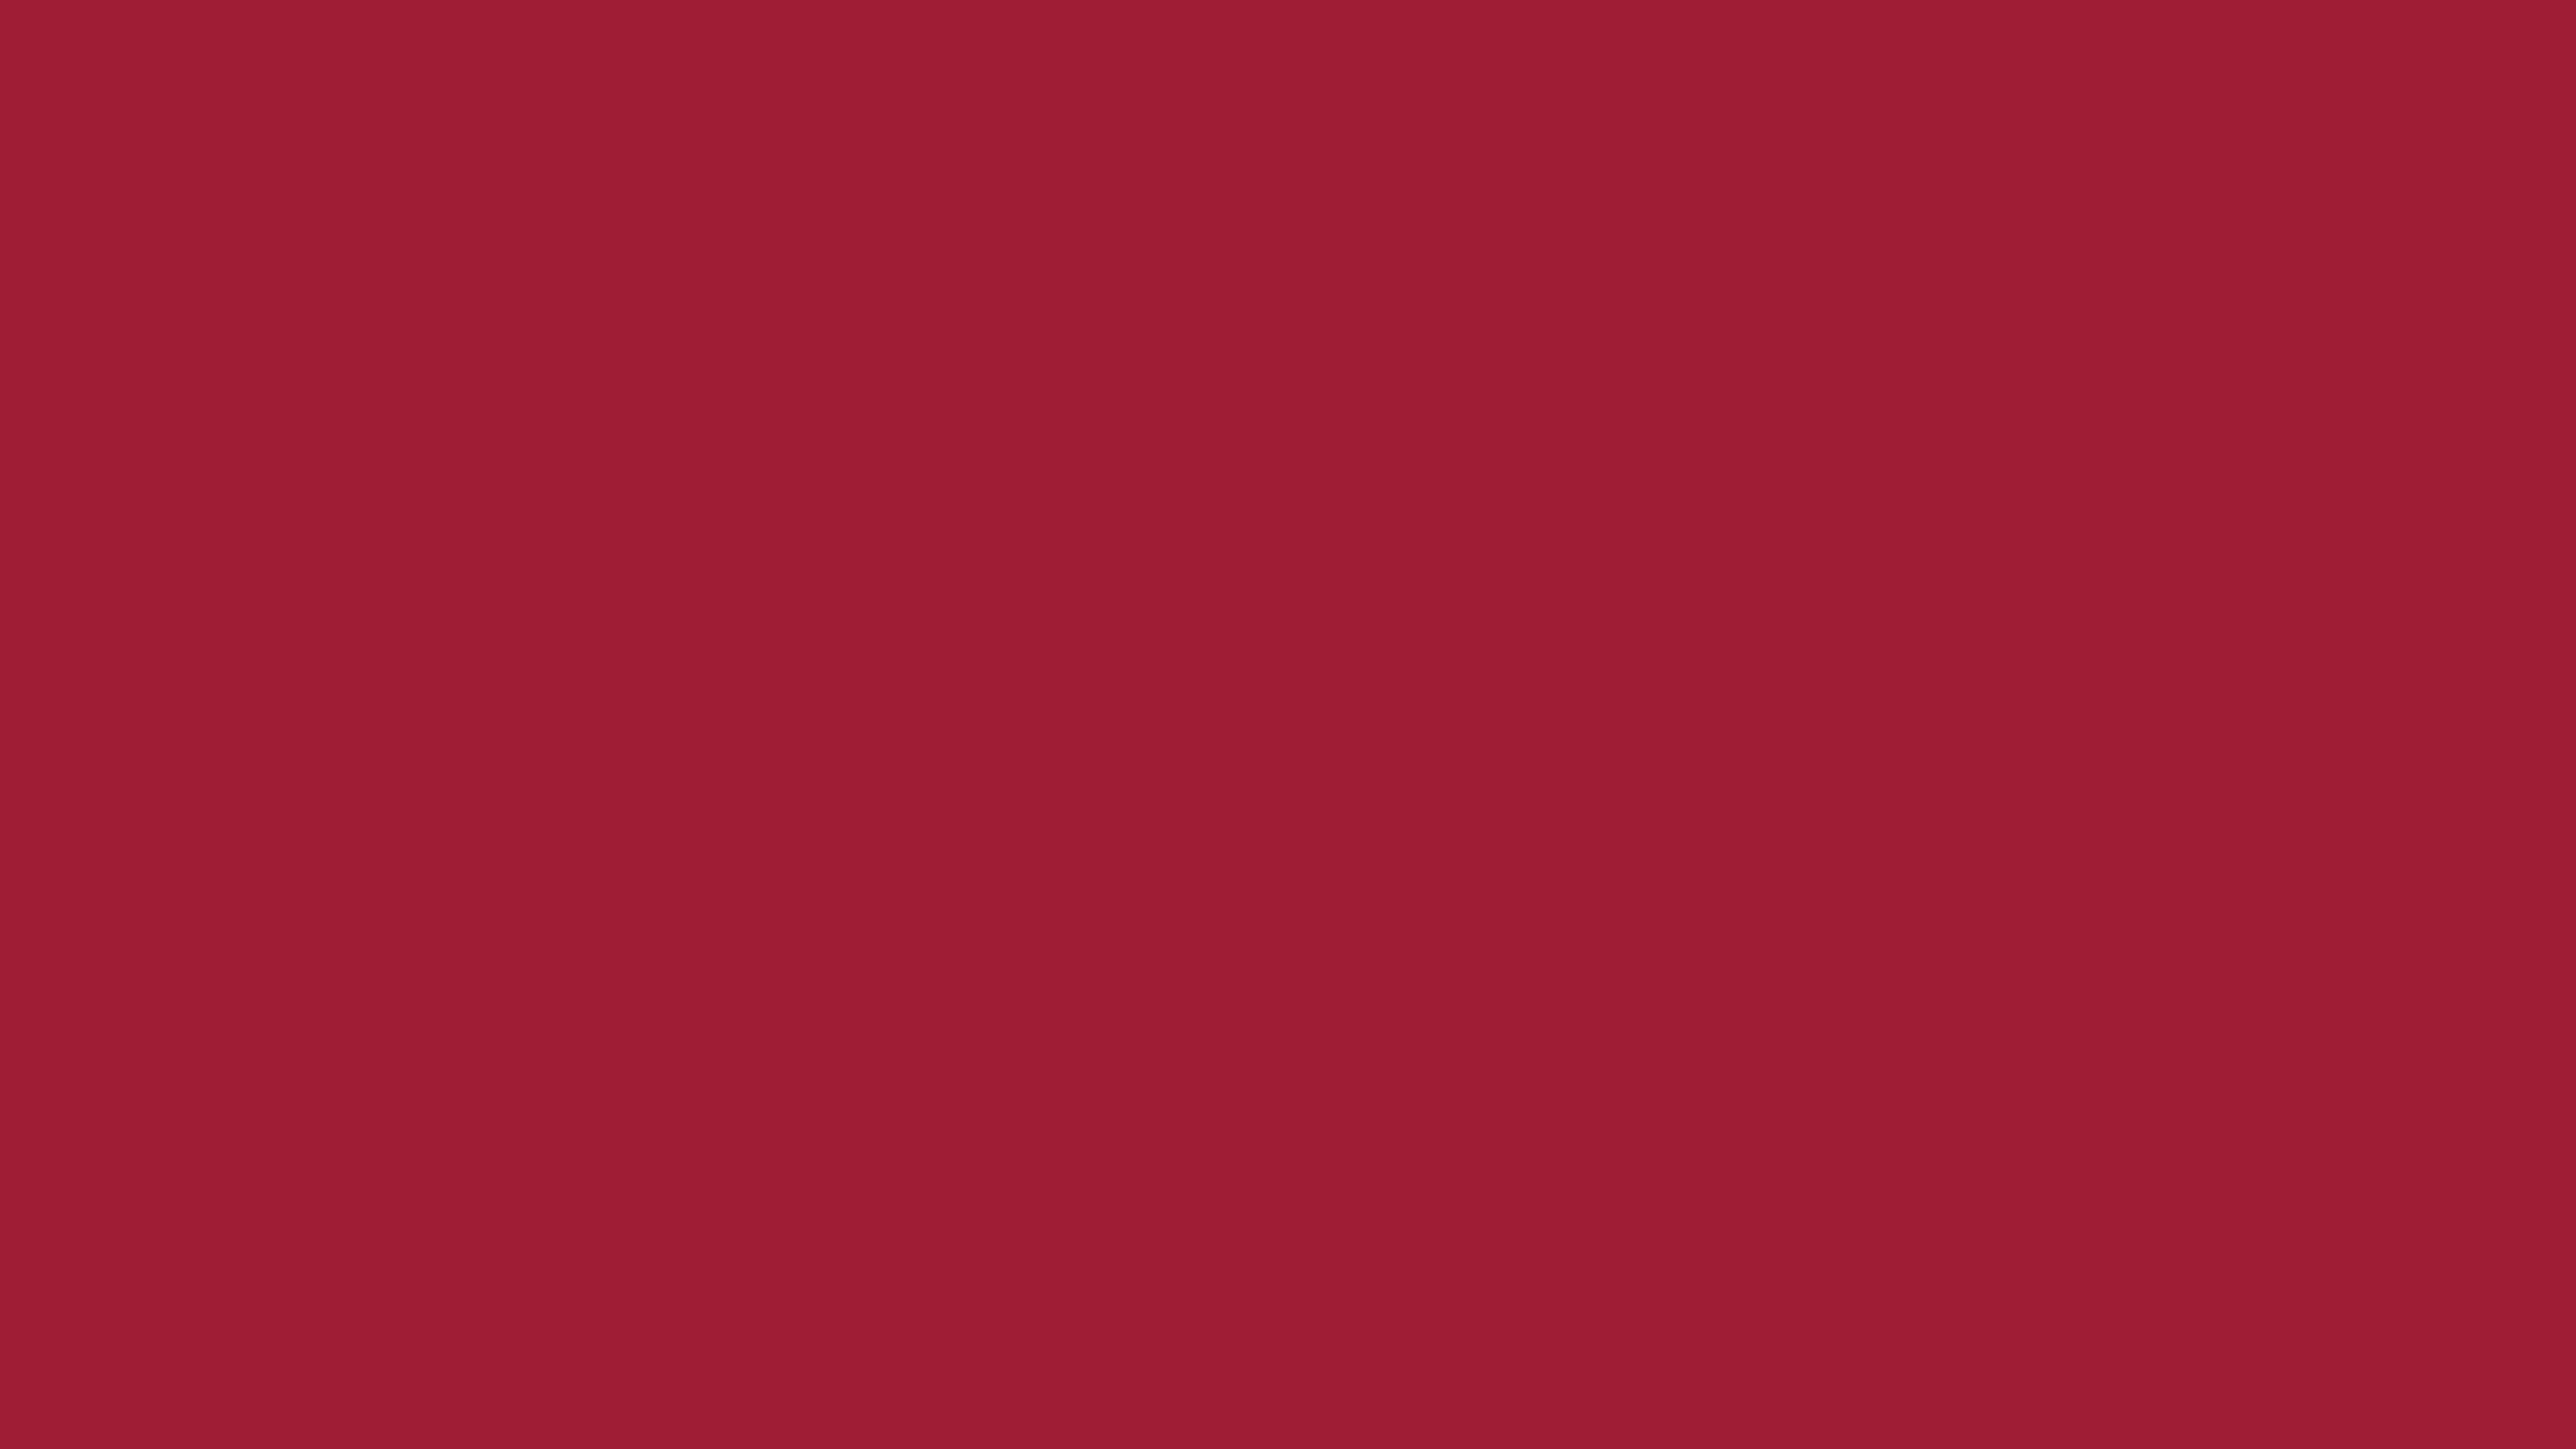 5120x2880 Vivid Burgundy Solid Color Background